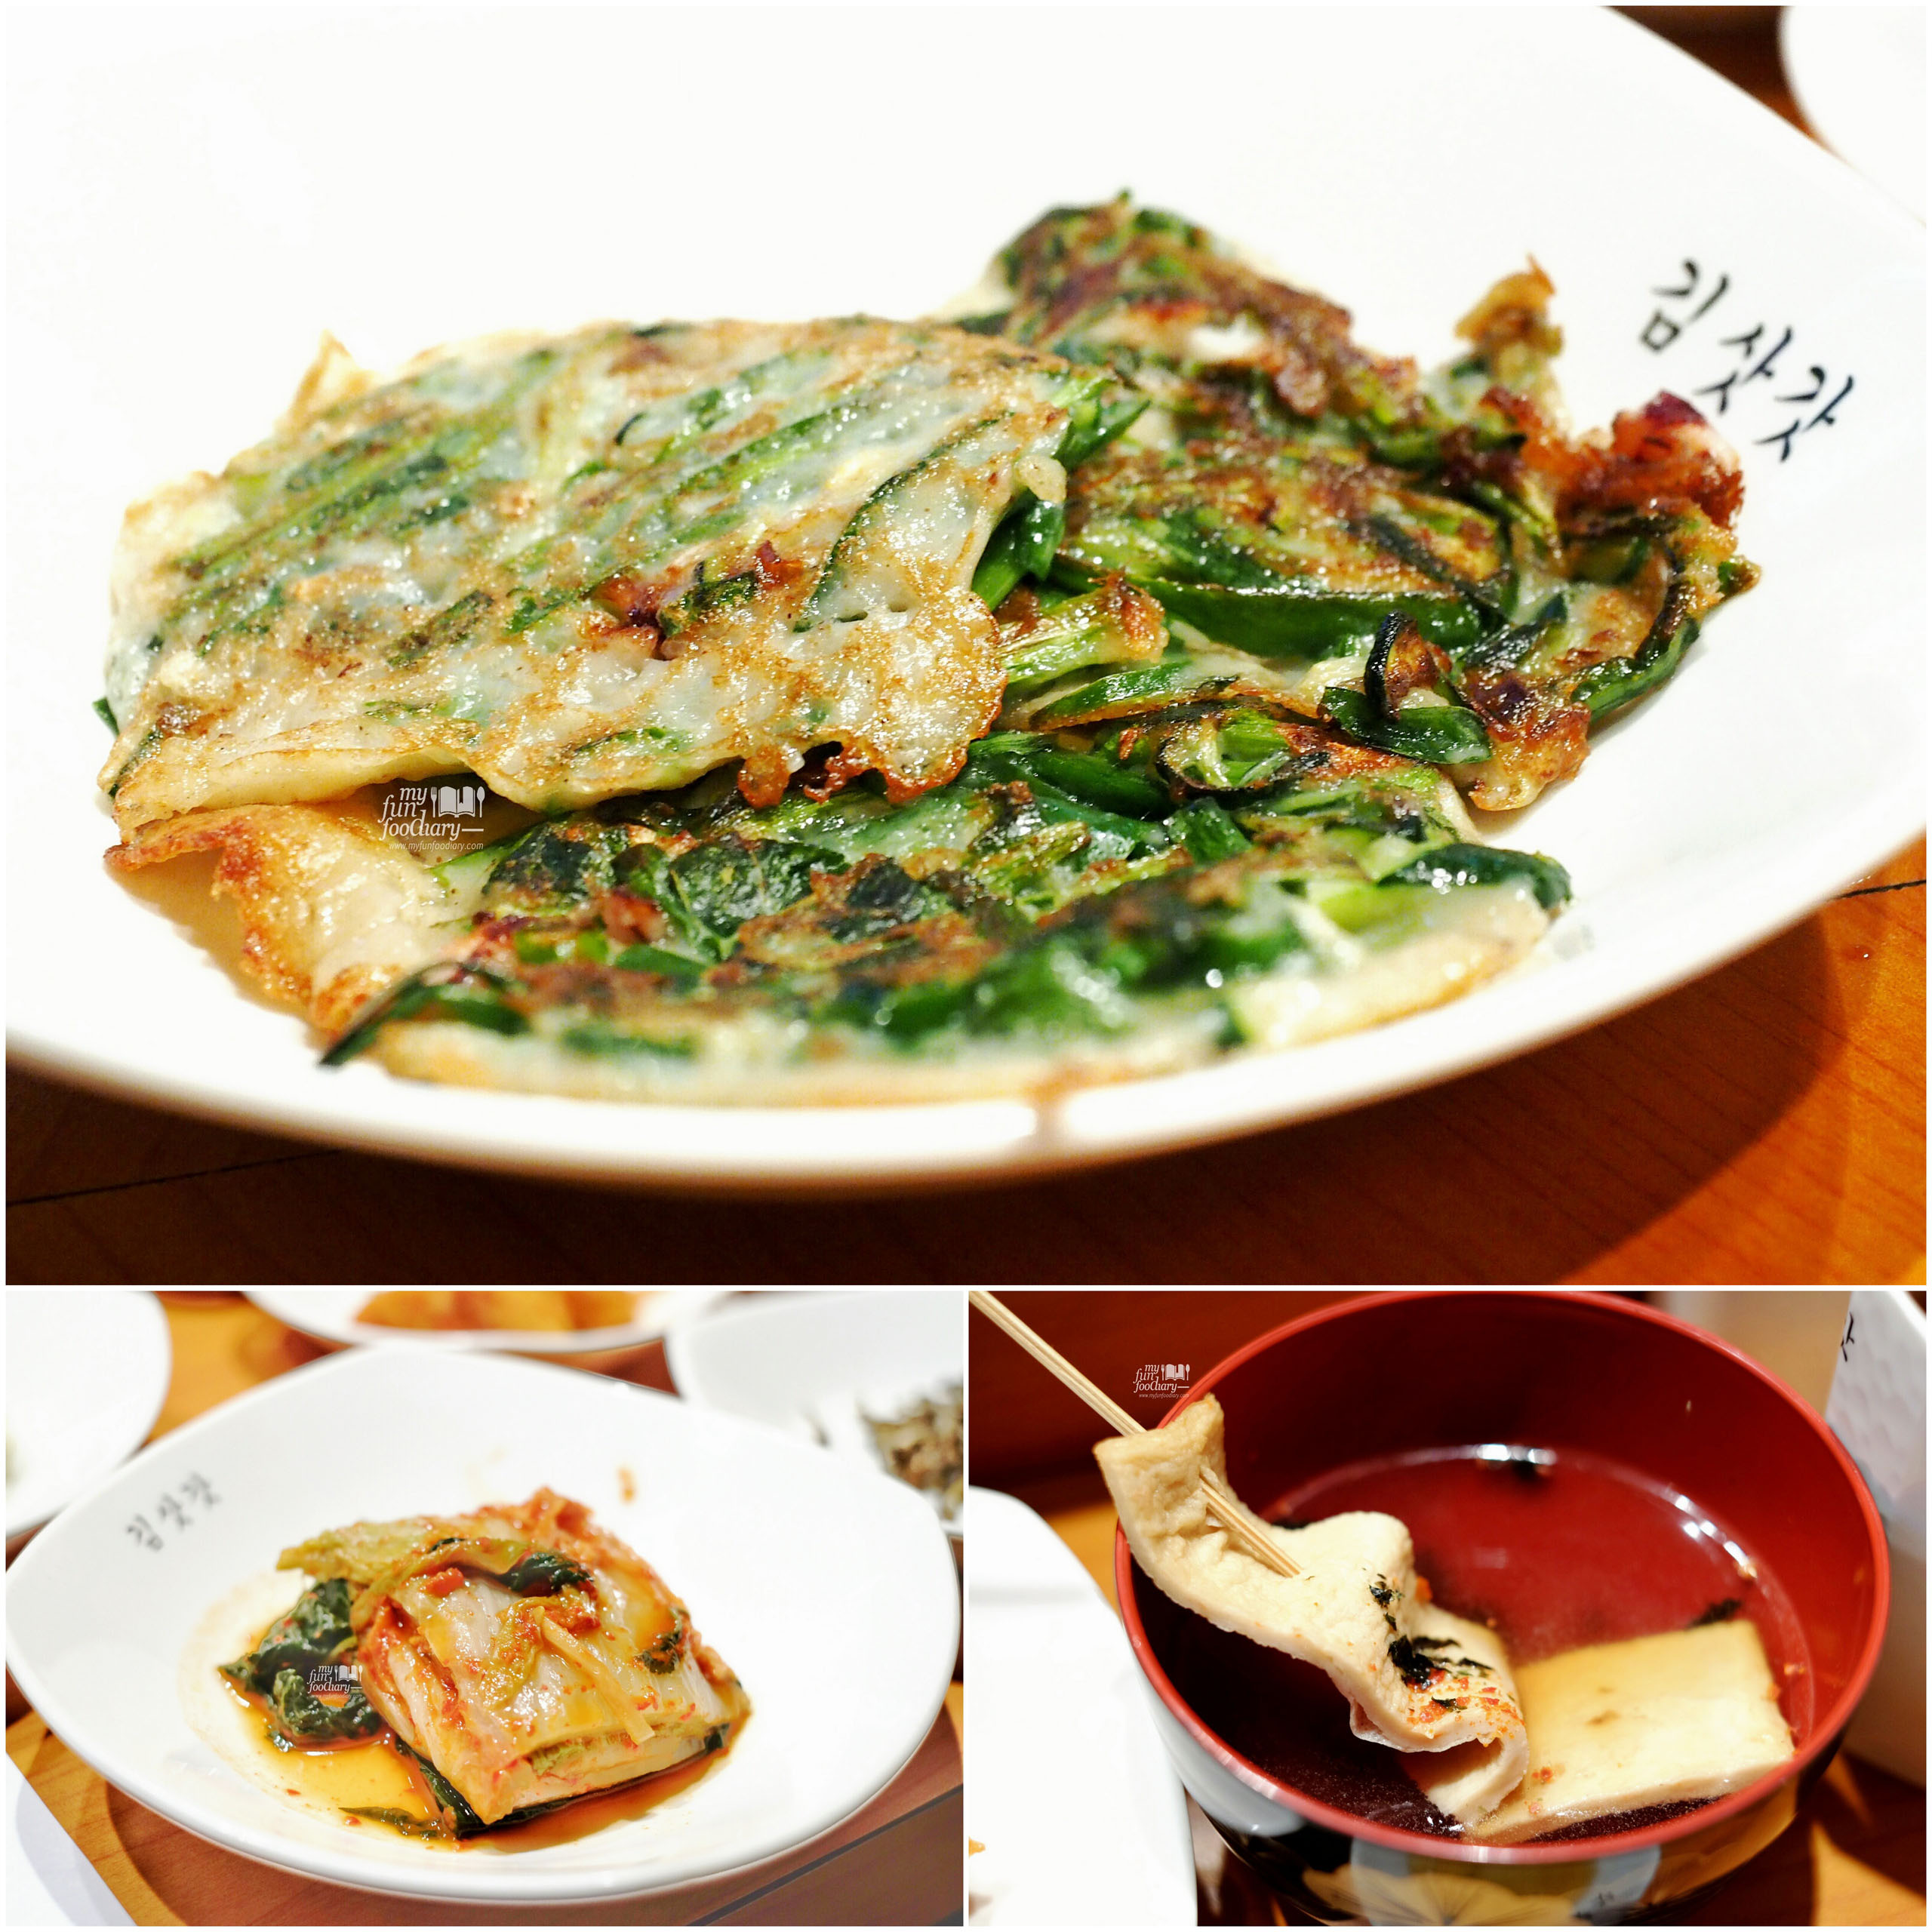 Korean Appetizers at Kim Sat Gat by Myfunfoodiary